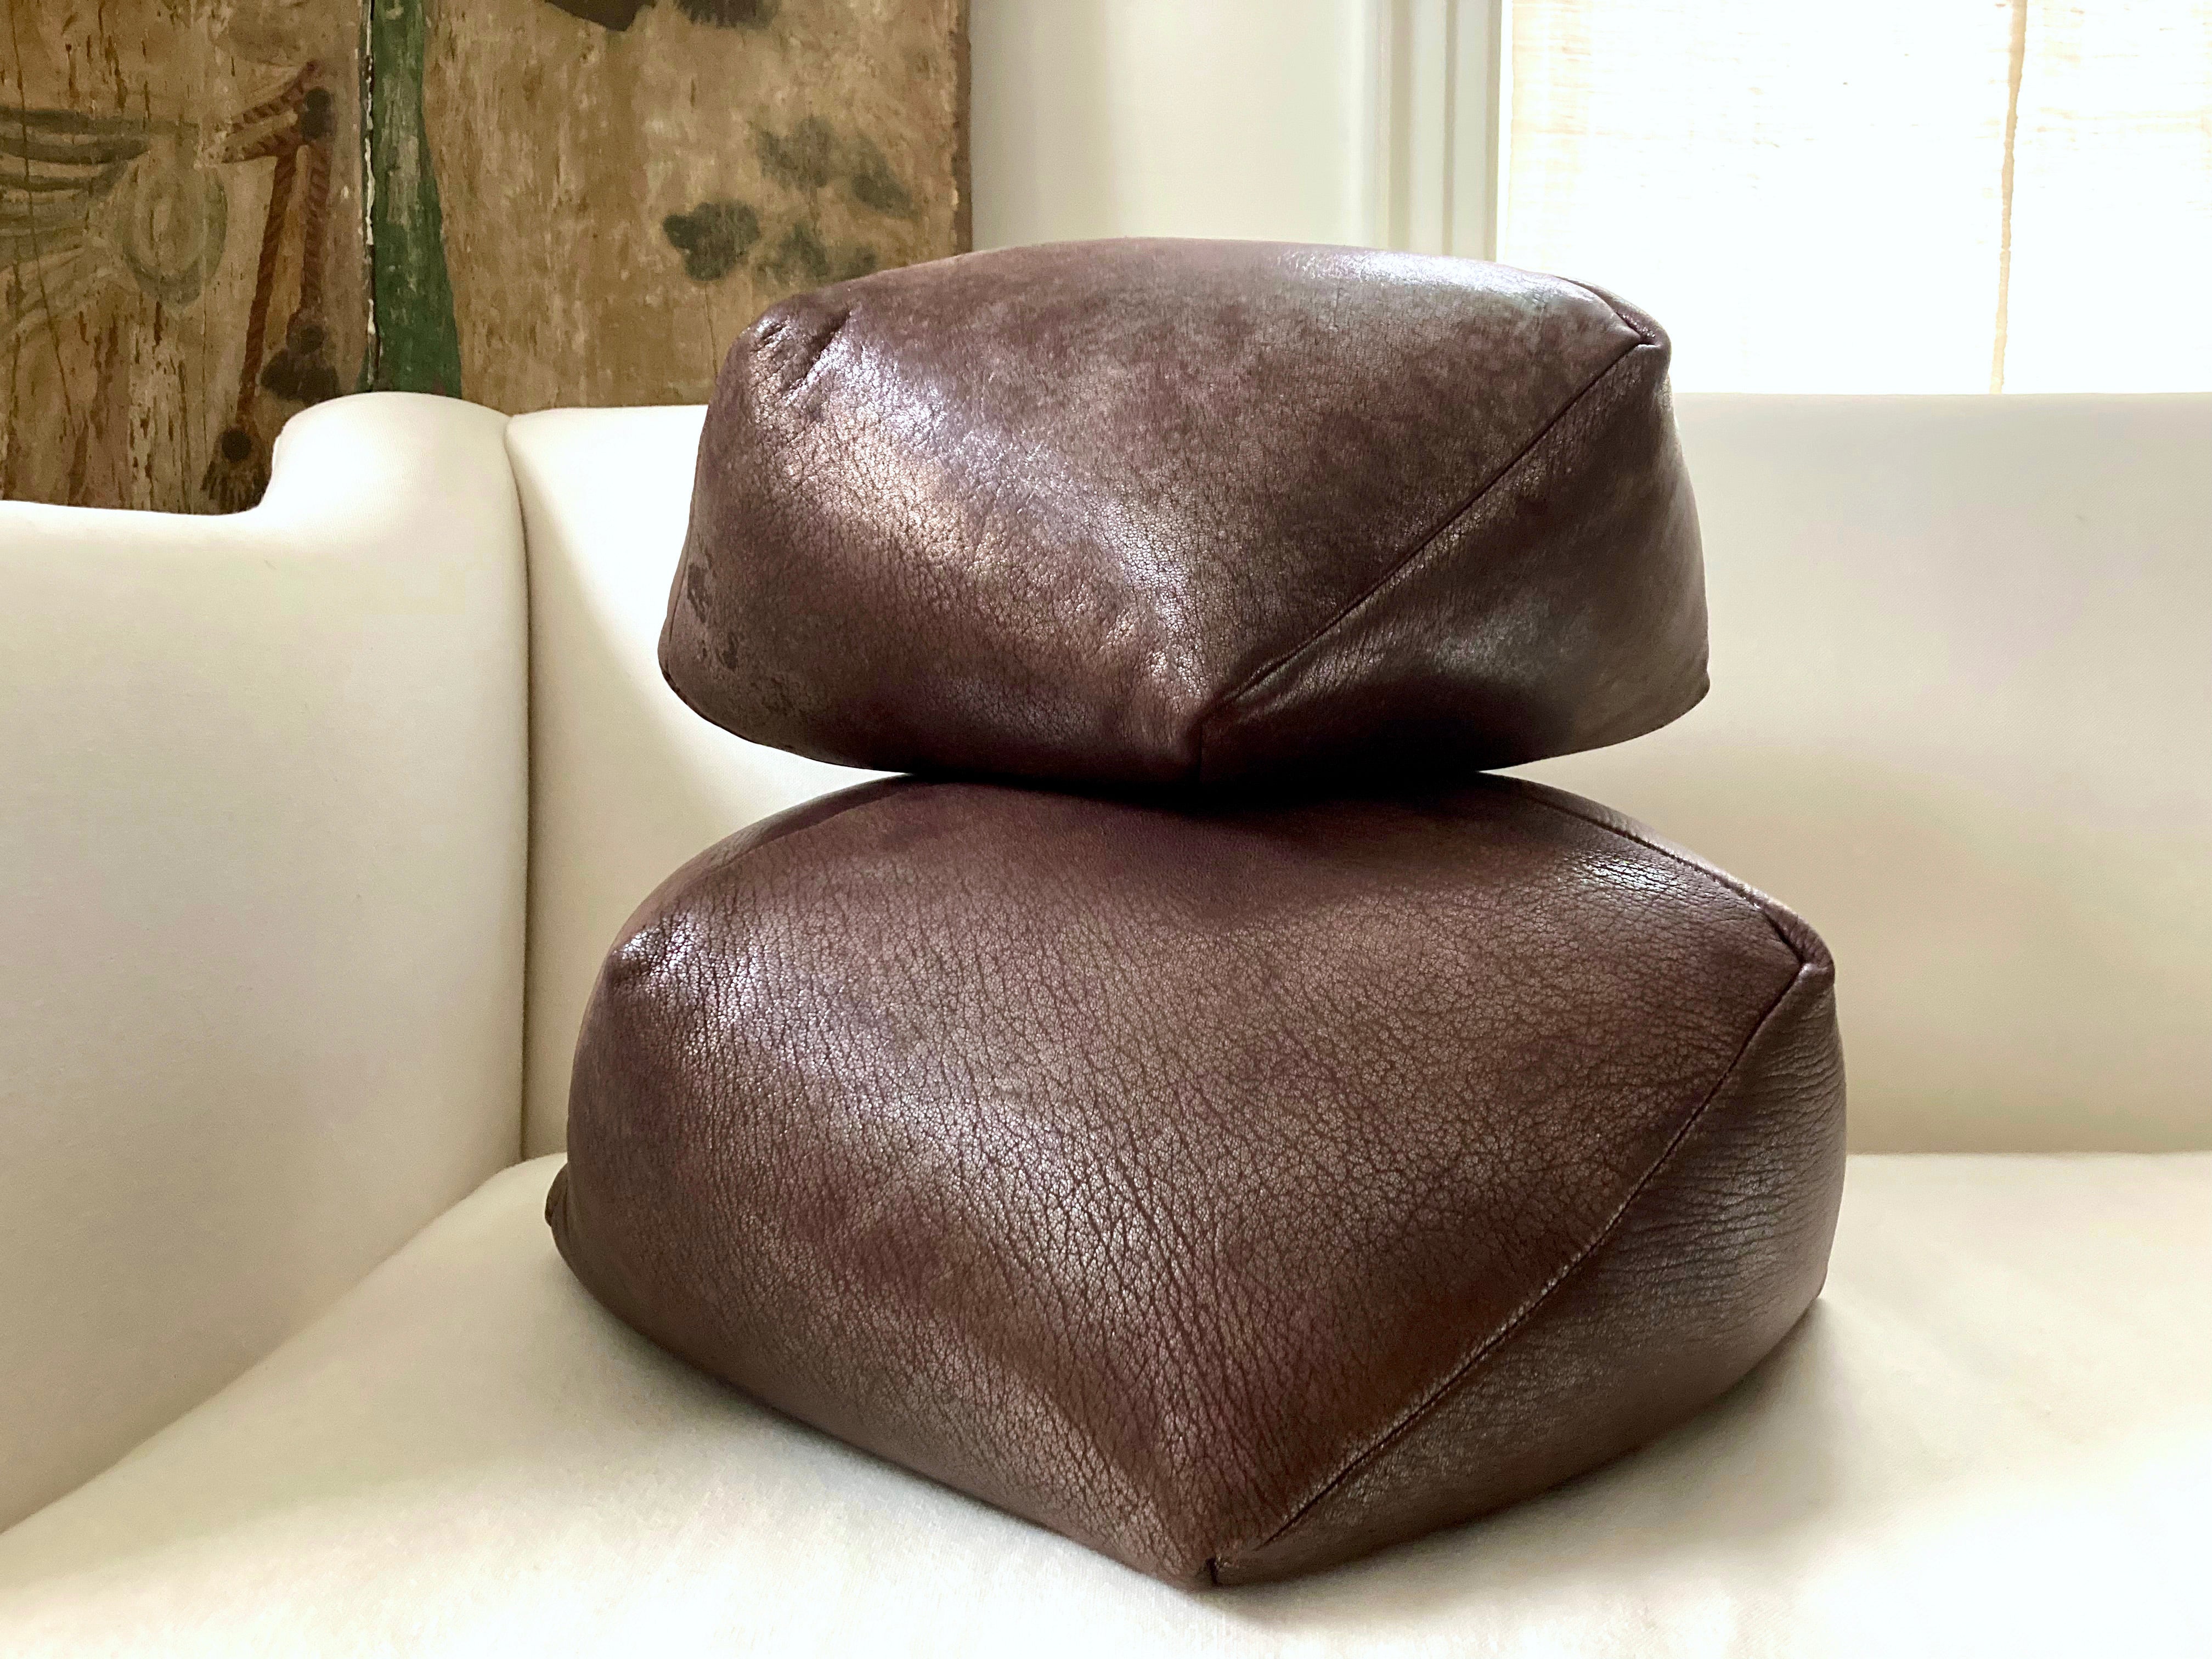 Dumpling Cushions in Medium and Large